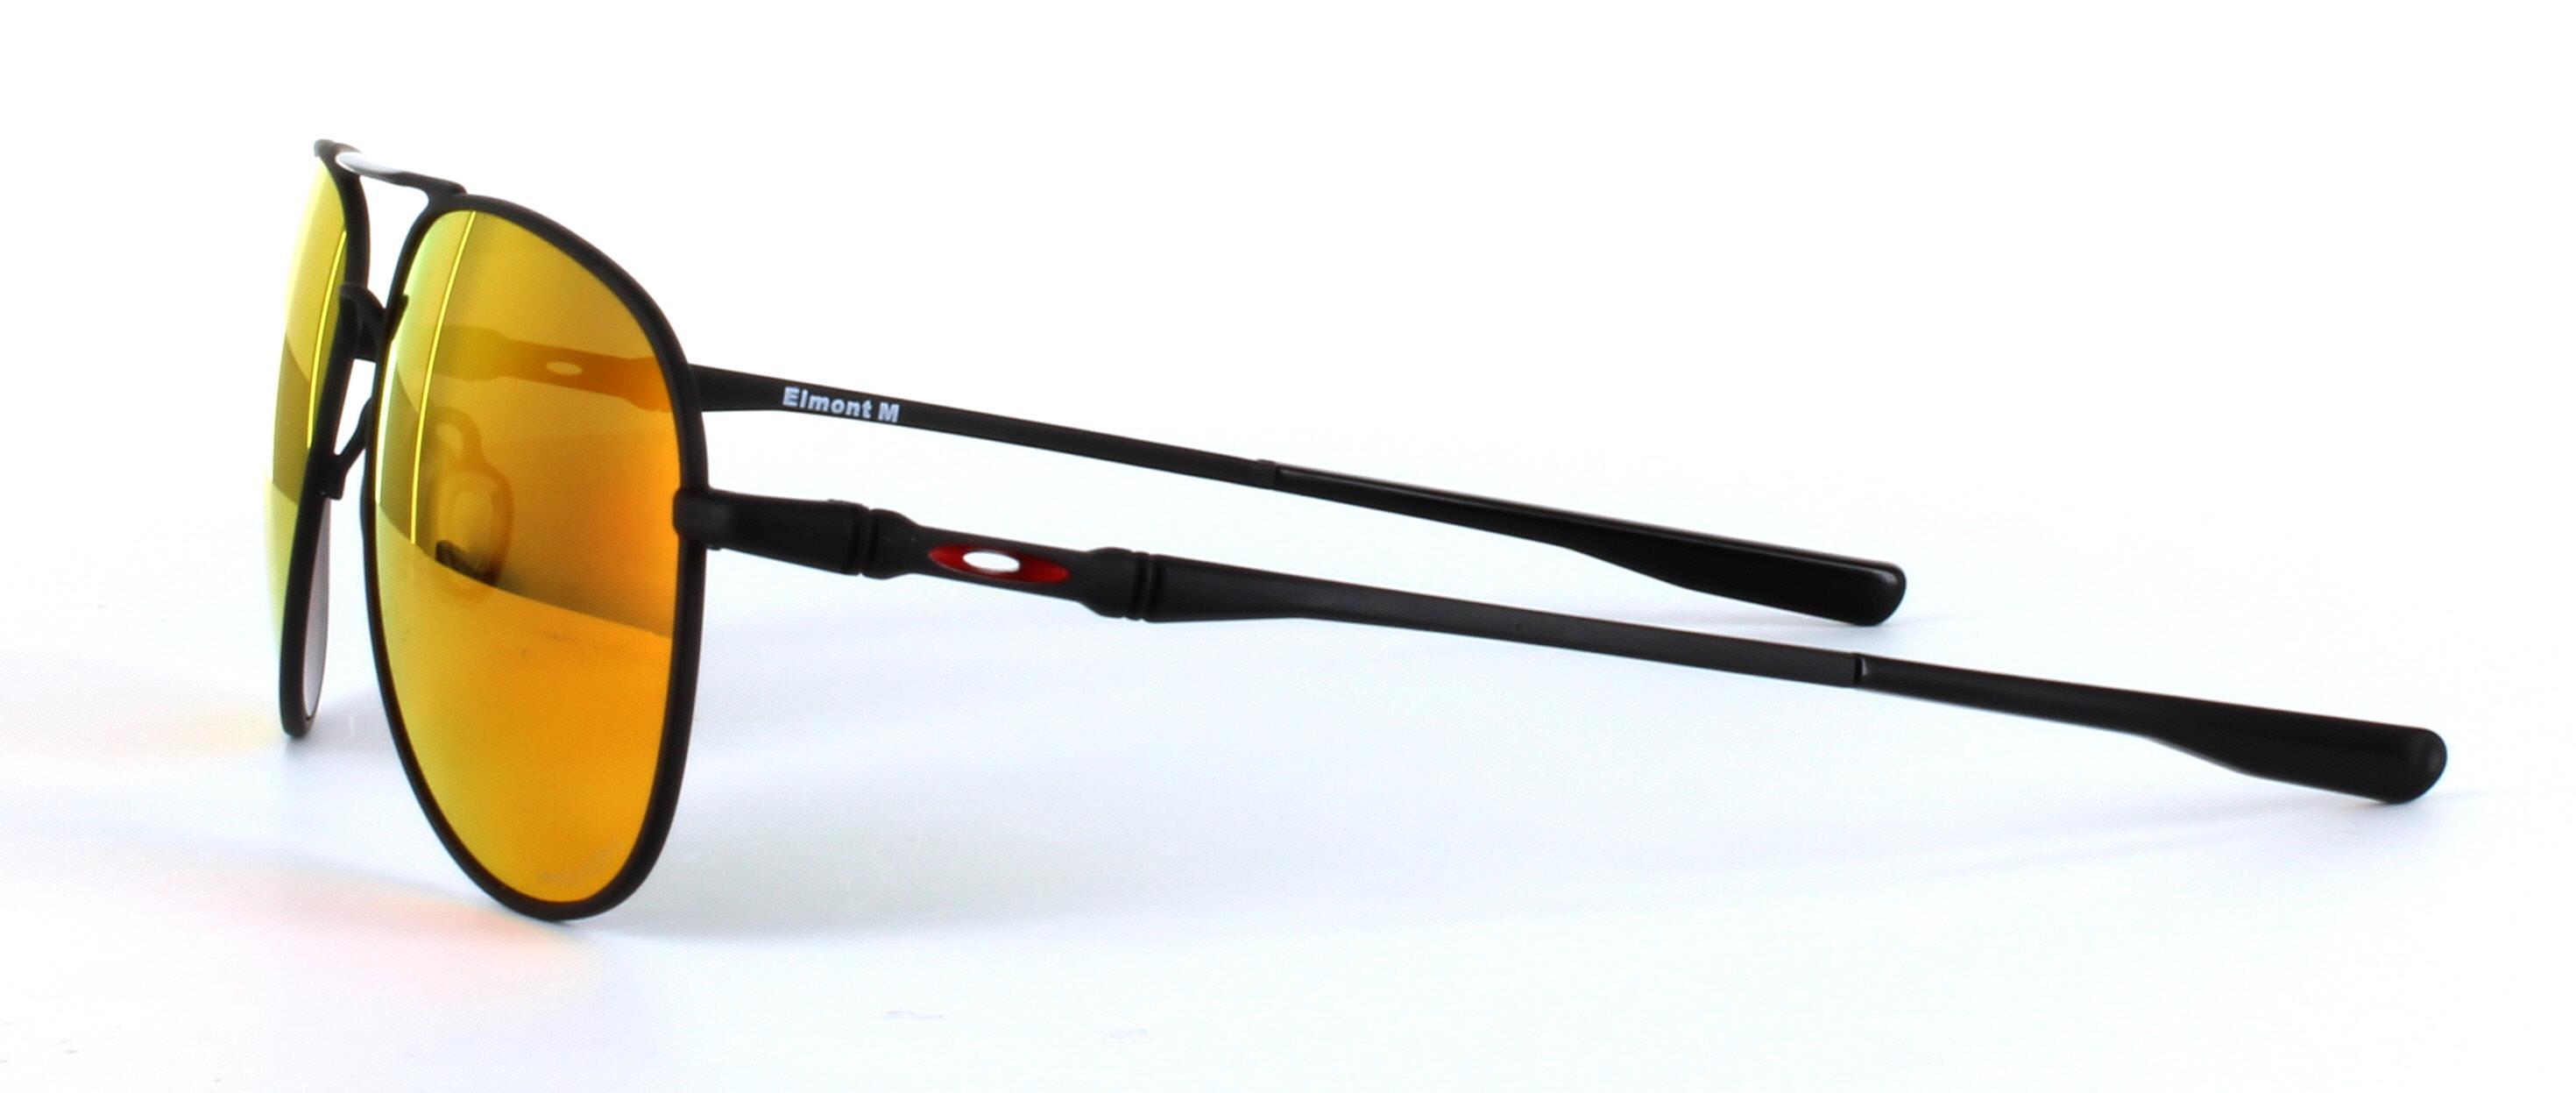 Oakley Elmont Black Full Rim Aviator Metal Prescription Sunglasses - Image View 2